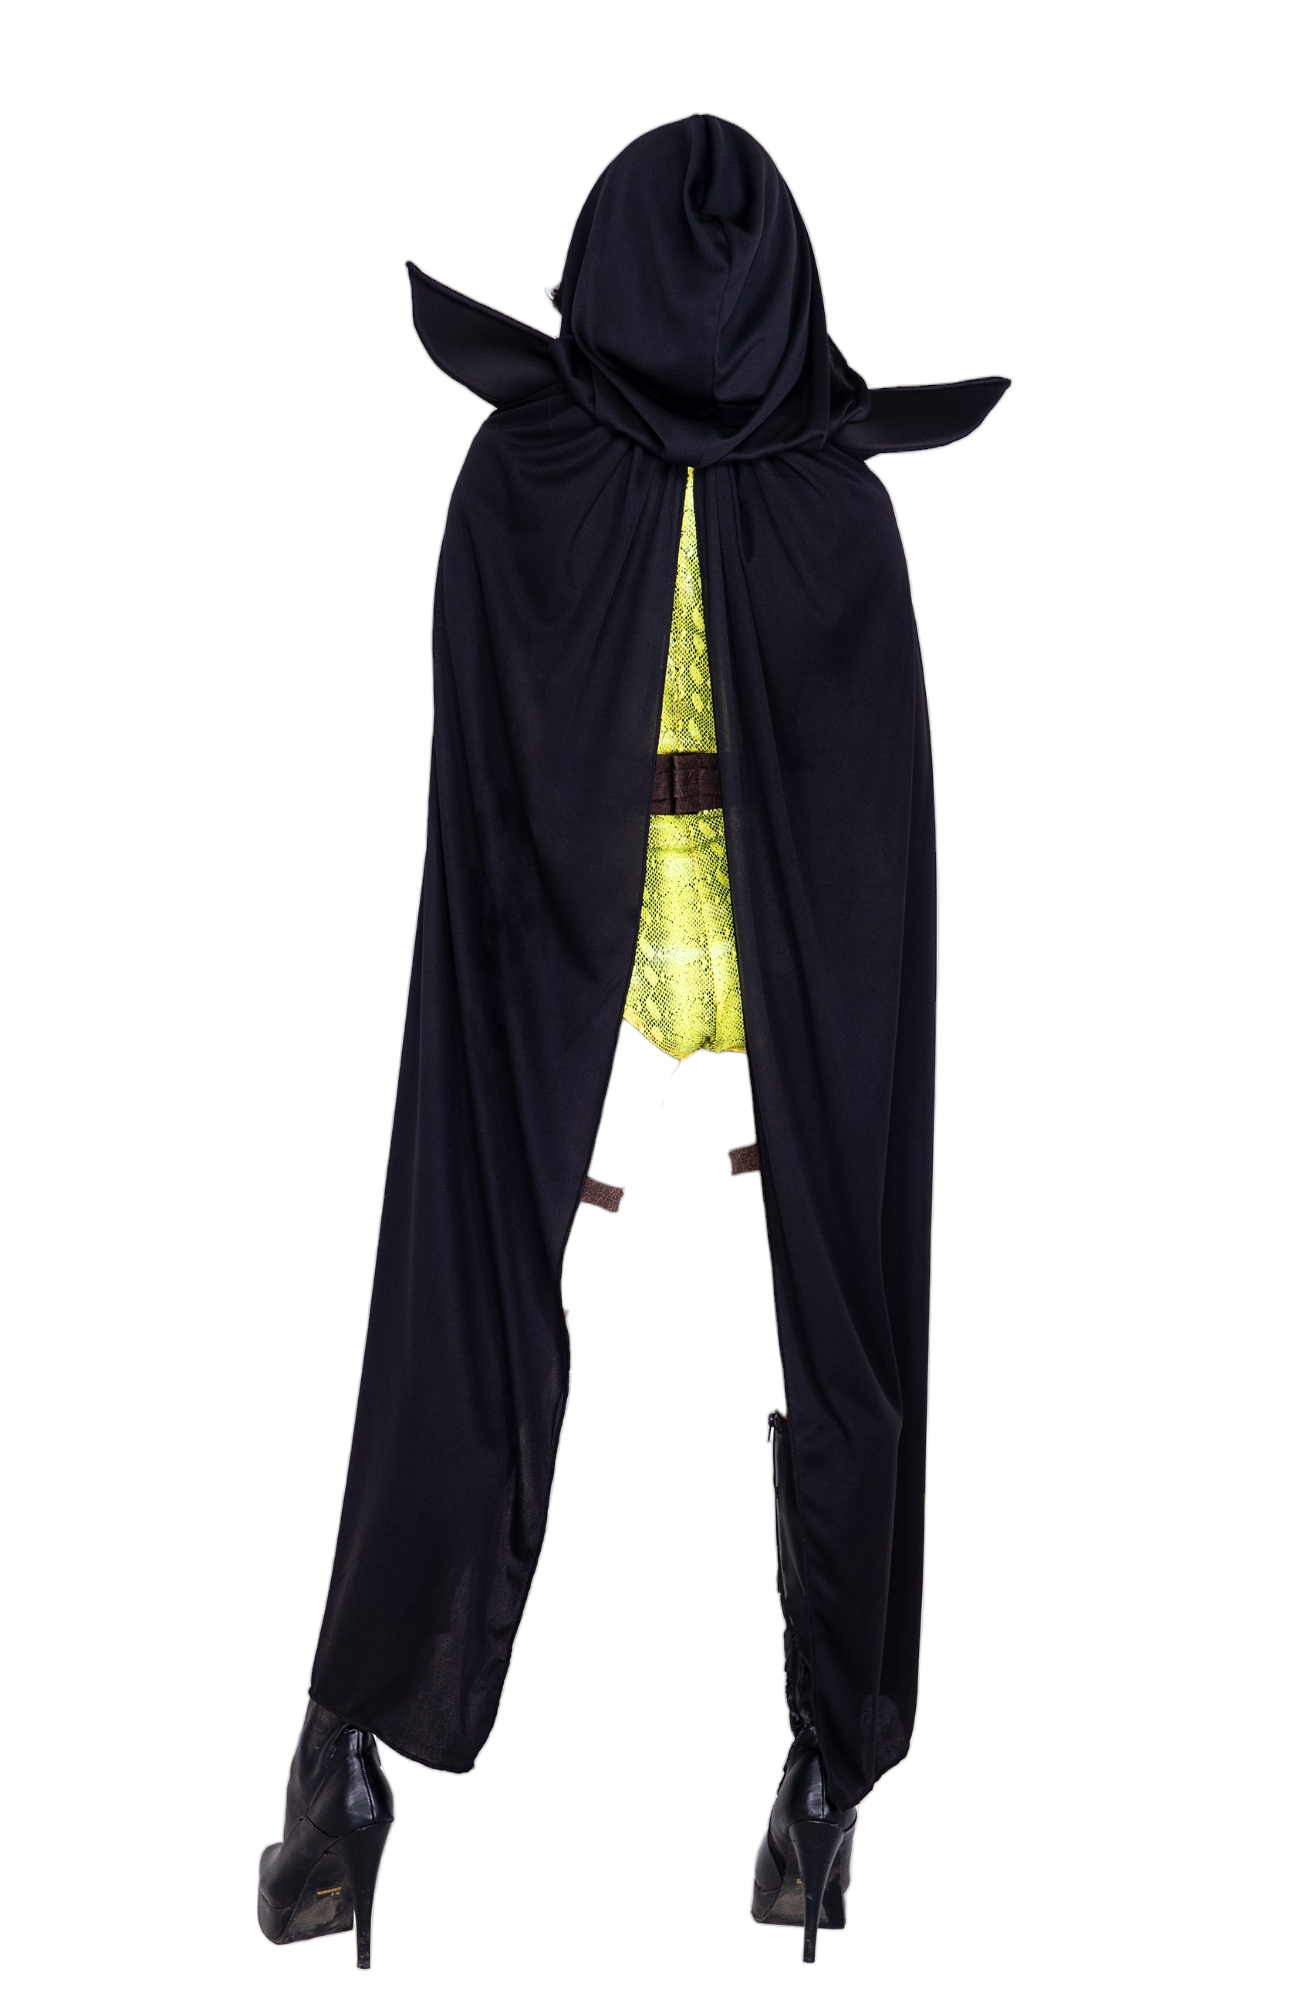 Roma Costume 4 PC Desert Combat Ninja Romper & Hooded Cape Black/Yellow